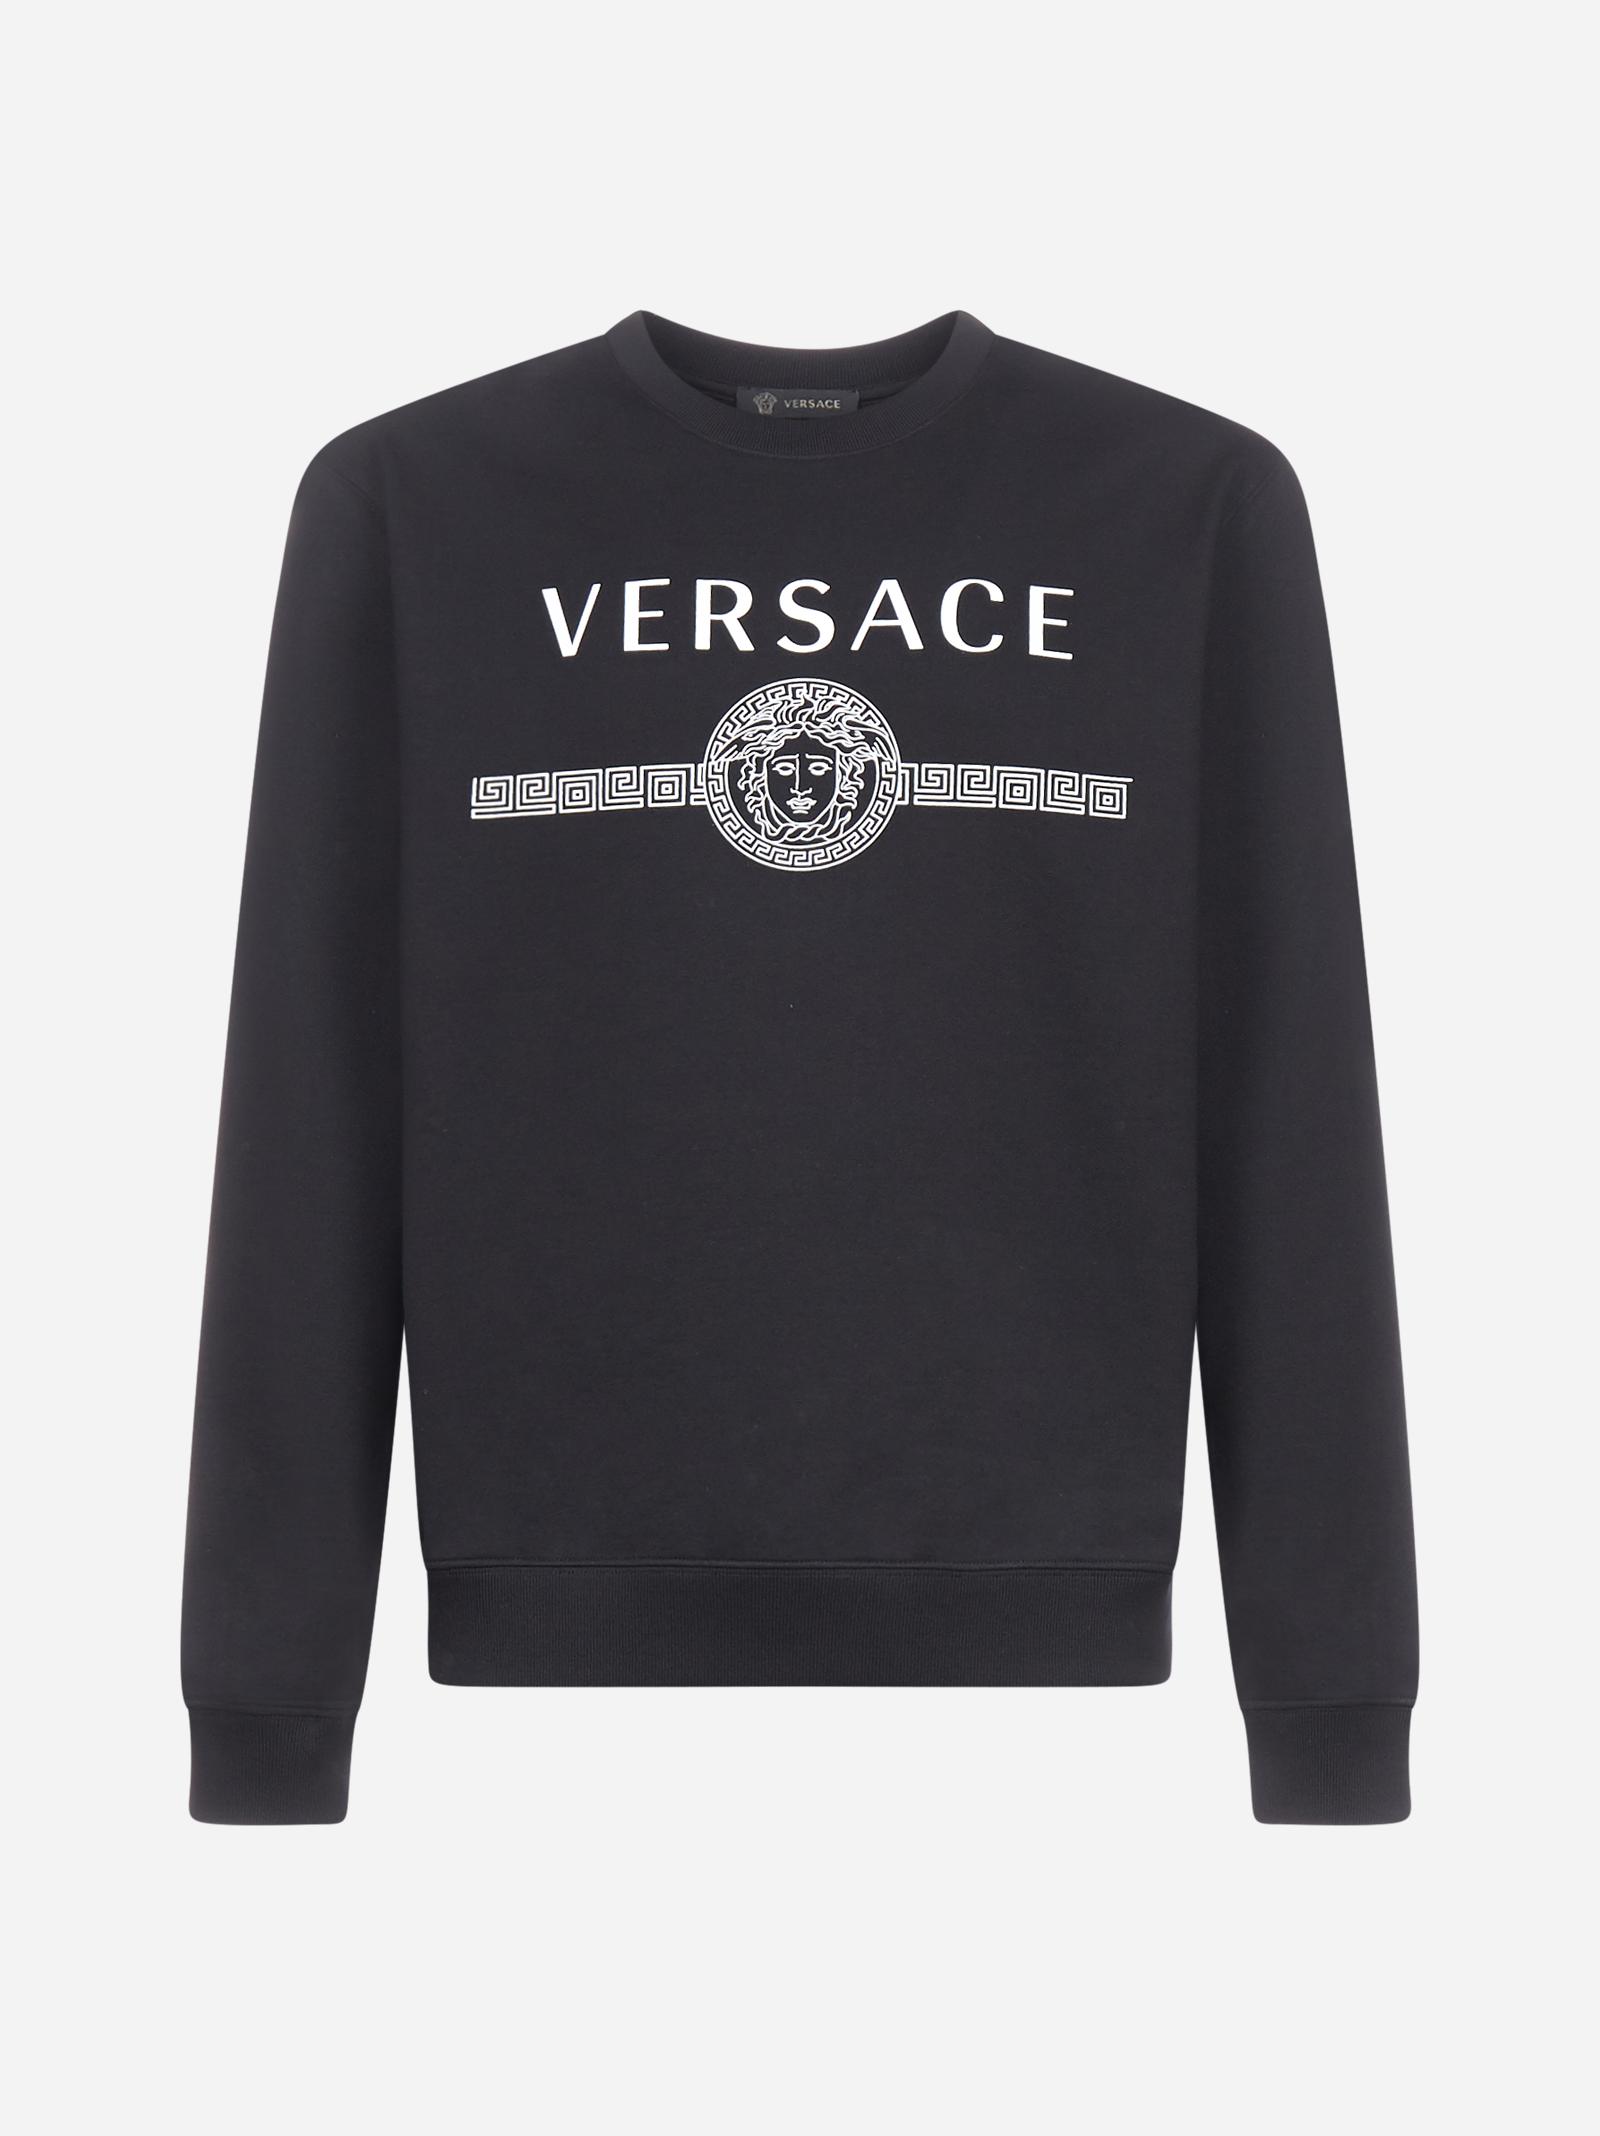 Versace Logo And Medusa Cotton Sweatshirt for Men - Lyst